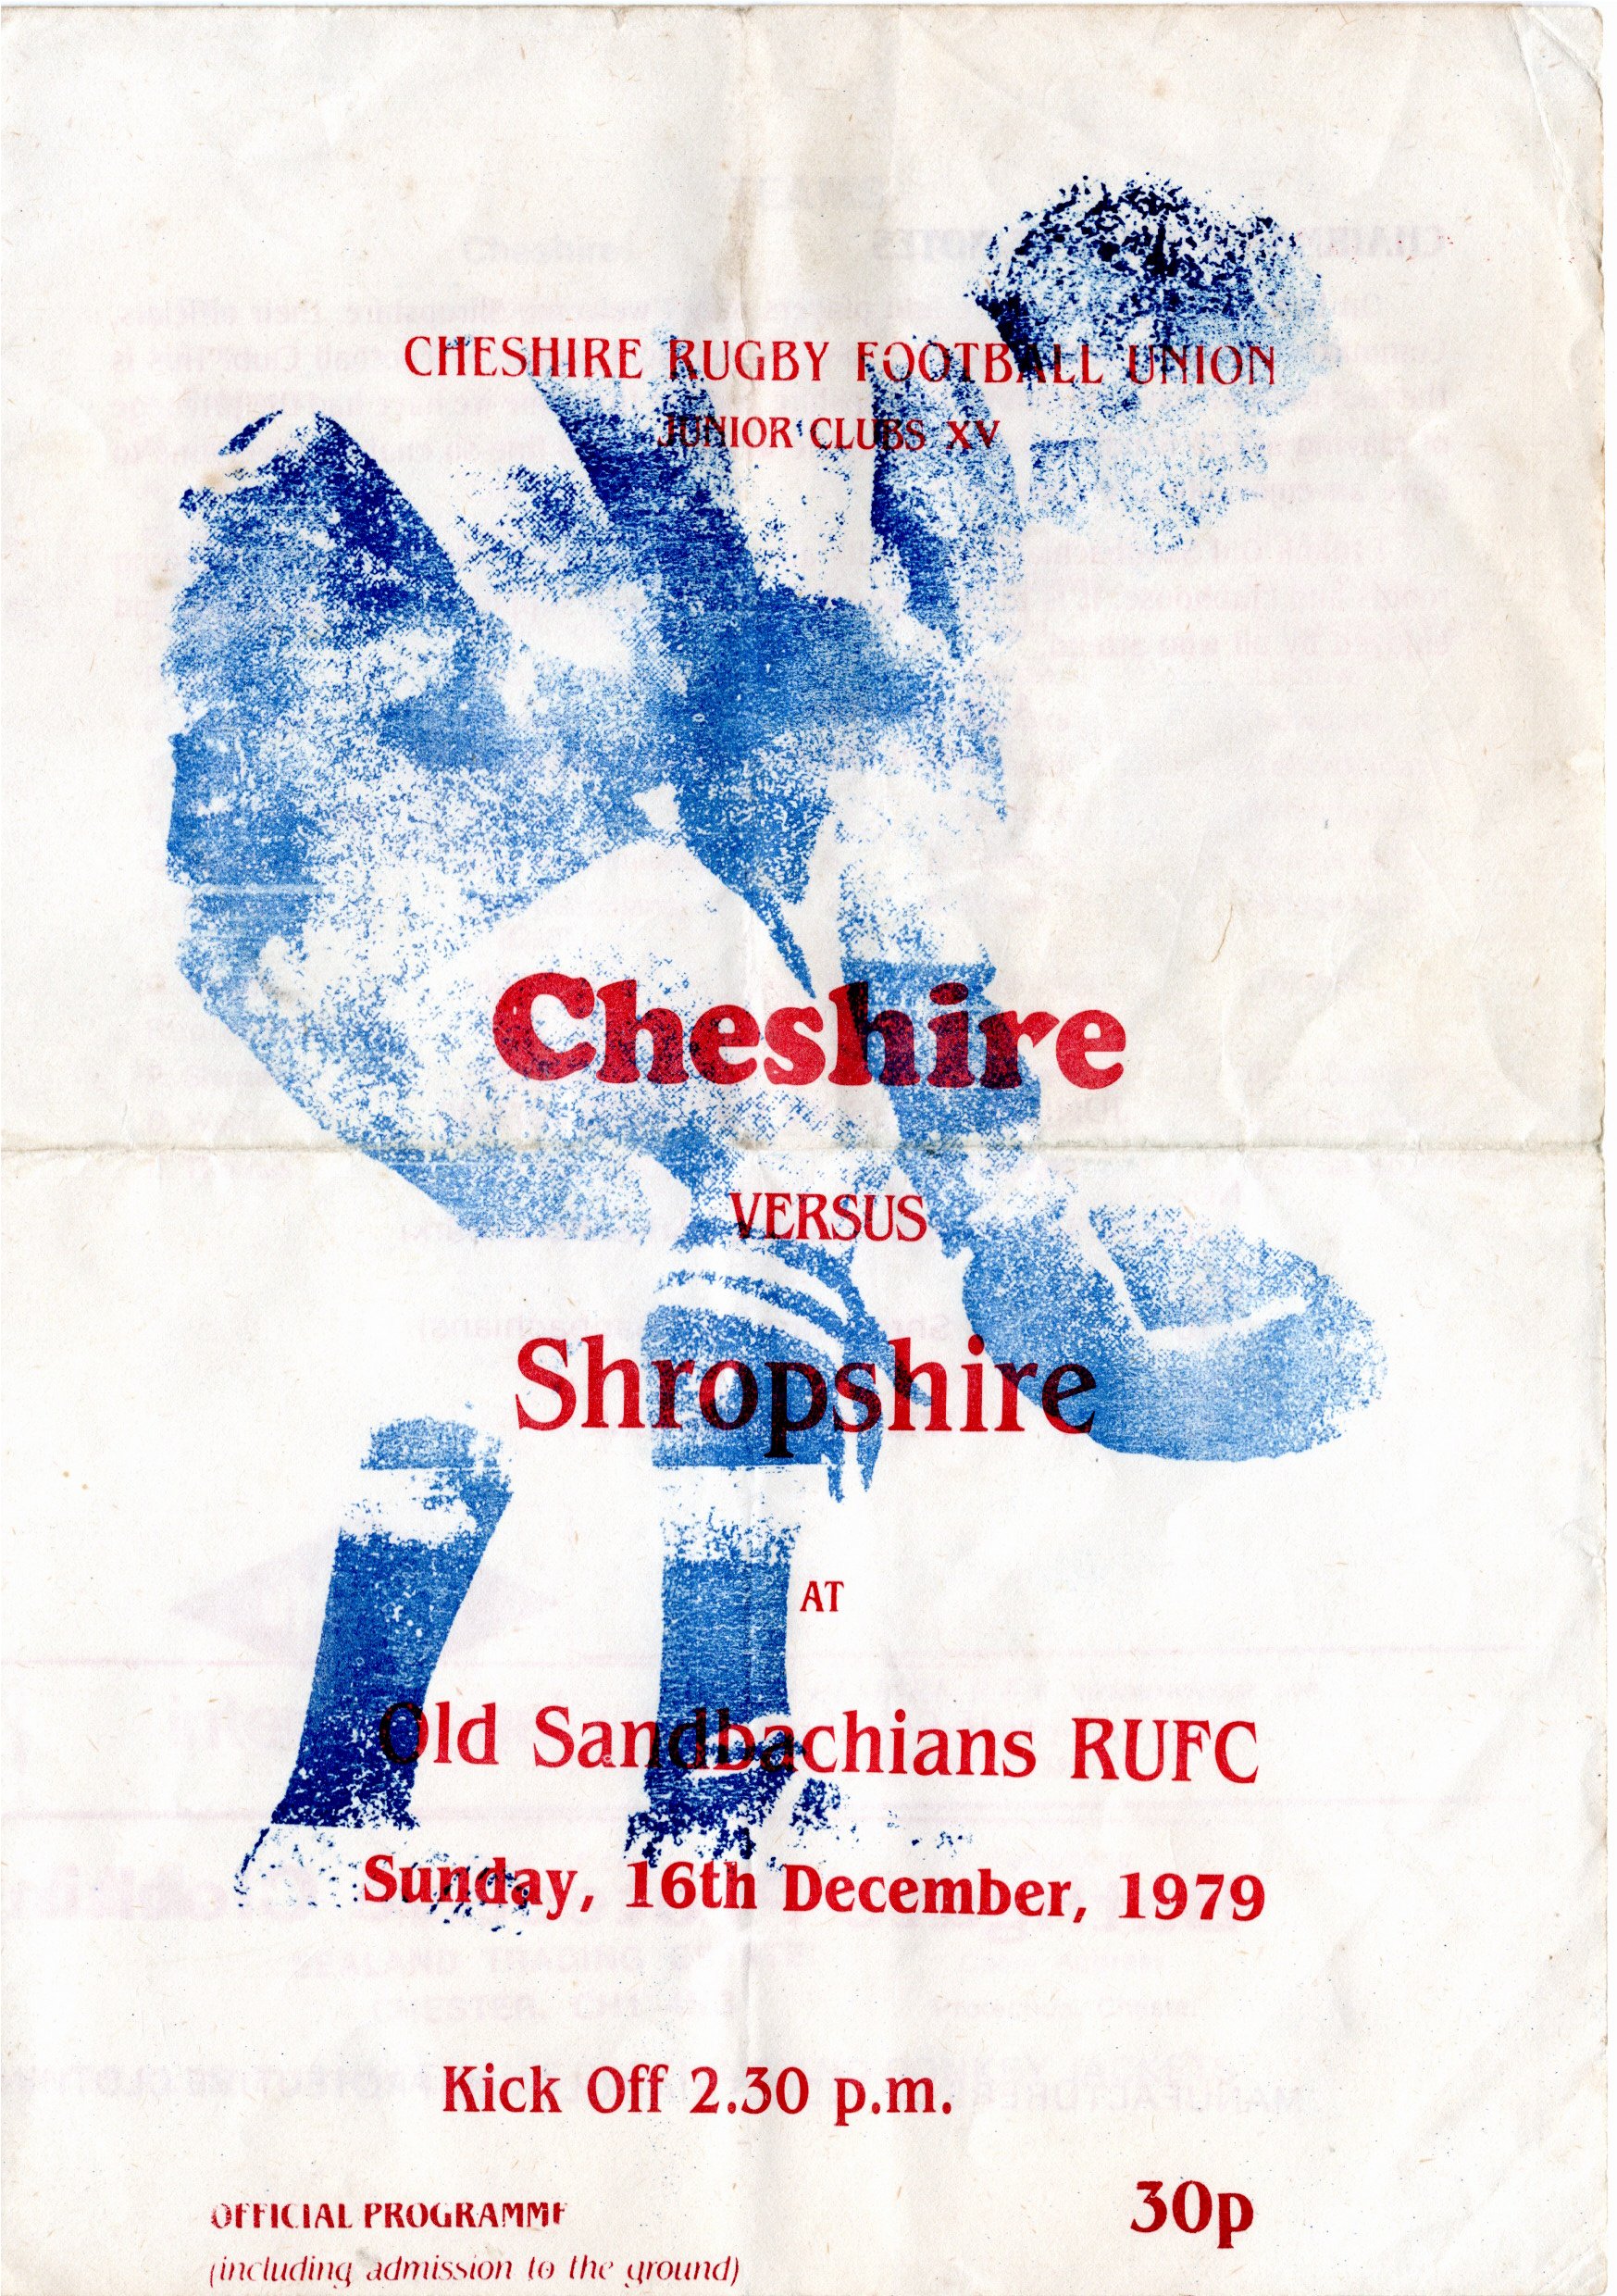 Photograph Old Instonians RUFC, 1979, Cheshire v Shropshire